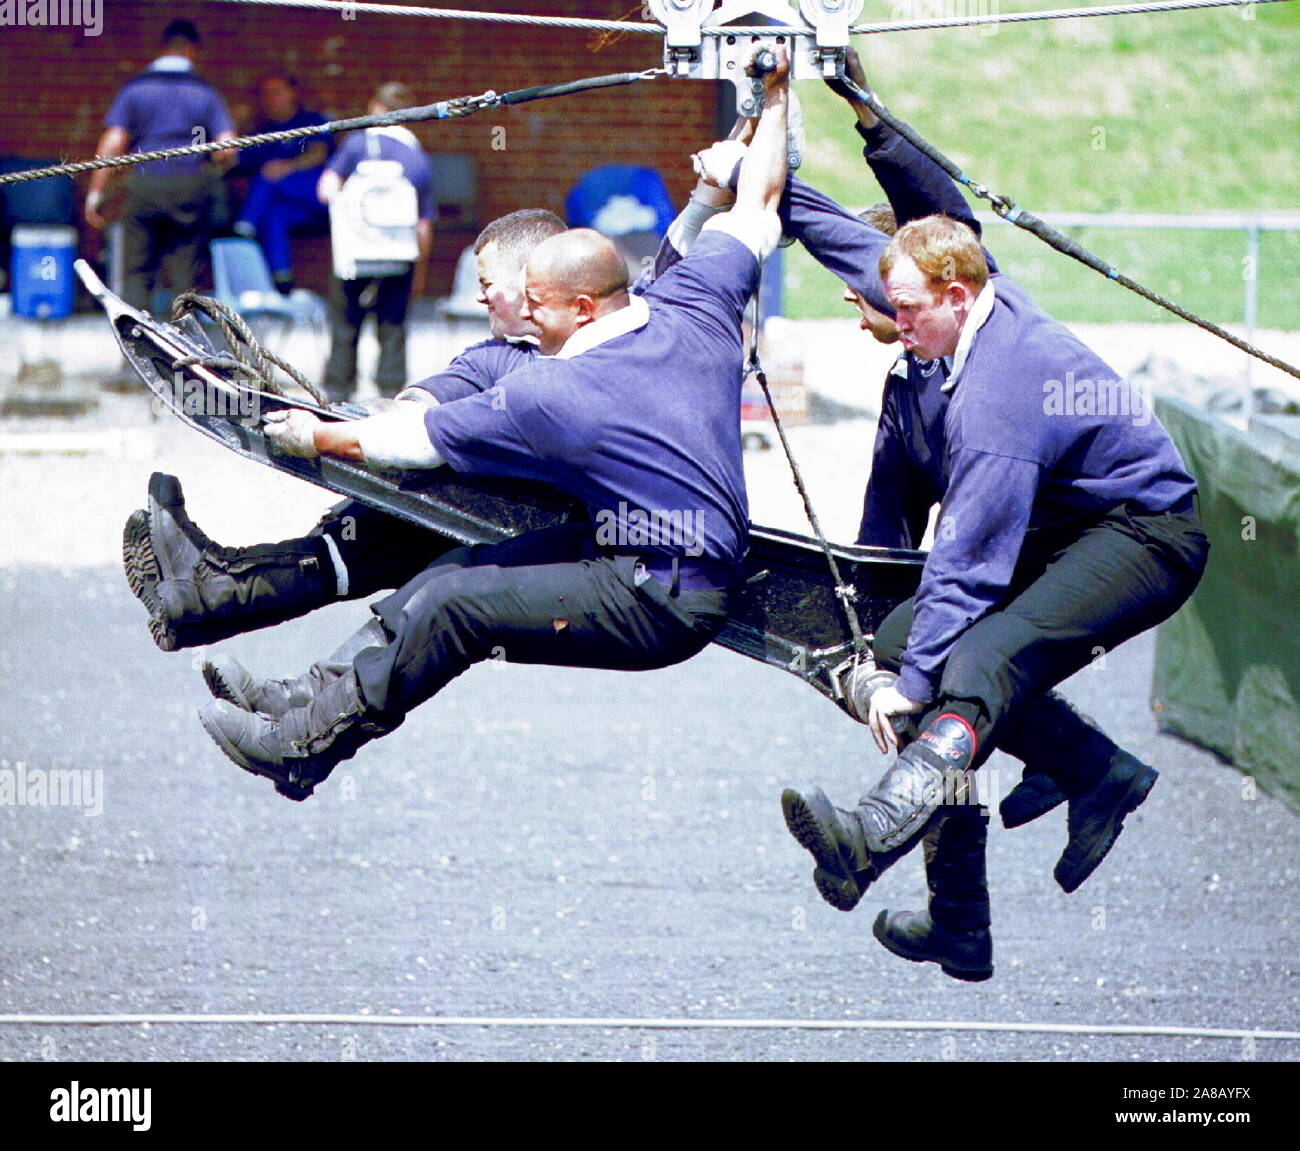 AJAXNETPHOTO. Mai, 1999. PORTSMOUTH, England. - Feld GUN TRAINING - ALLE AN BORD! - PORTSMOUTH A-TEAM IN DER PRAXIS AUSBILDUNG FÜR DIE EARLS COURT, LONDON, ROYAL TURNIER KONKURRENZ AN IHRE AUSBILDUNG AM WHALE ISLAND. Foto: Jonathan Eastland/AJAX REF: 3 0599 Stockfoto